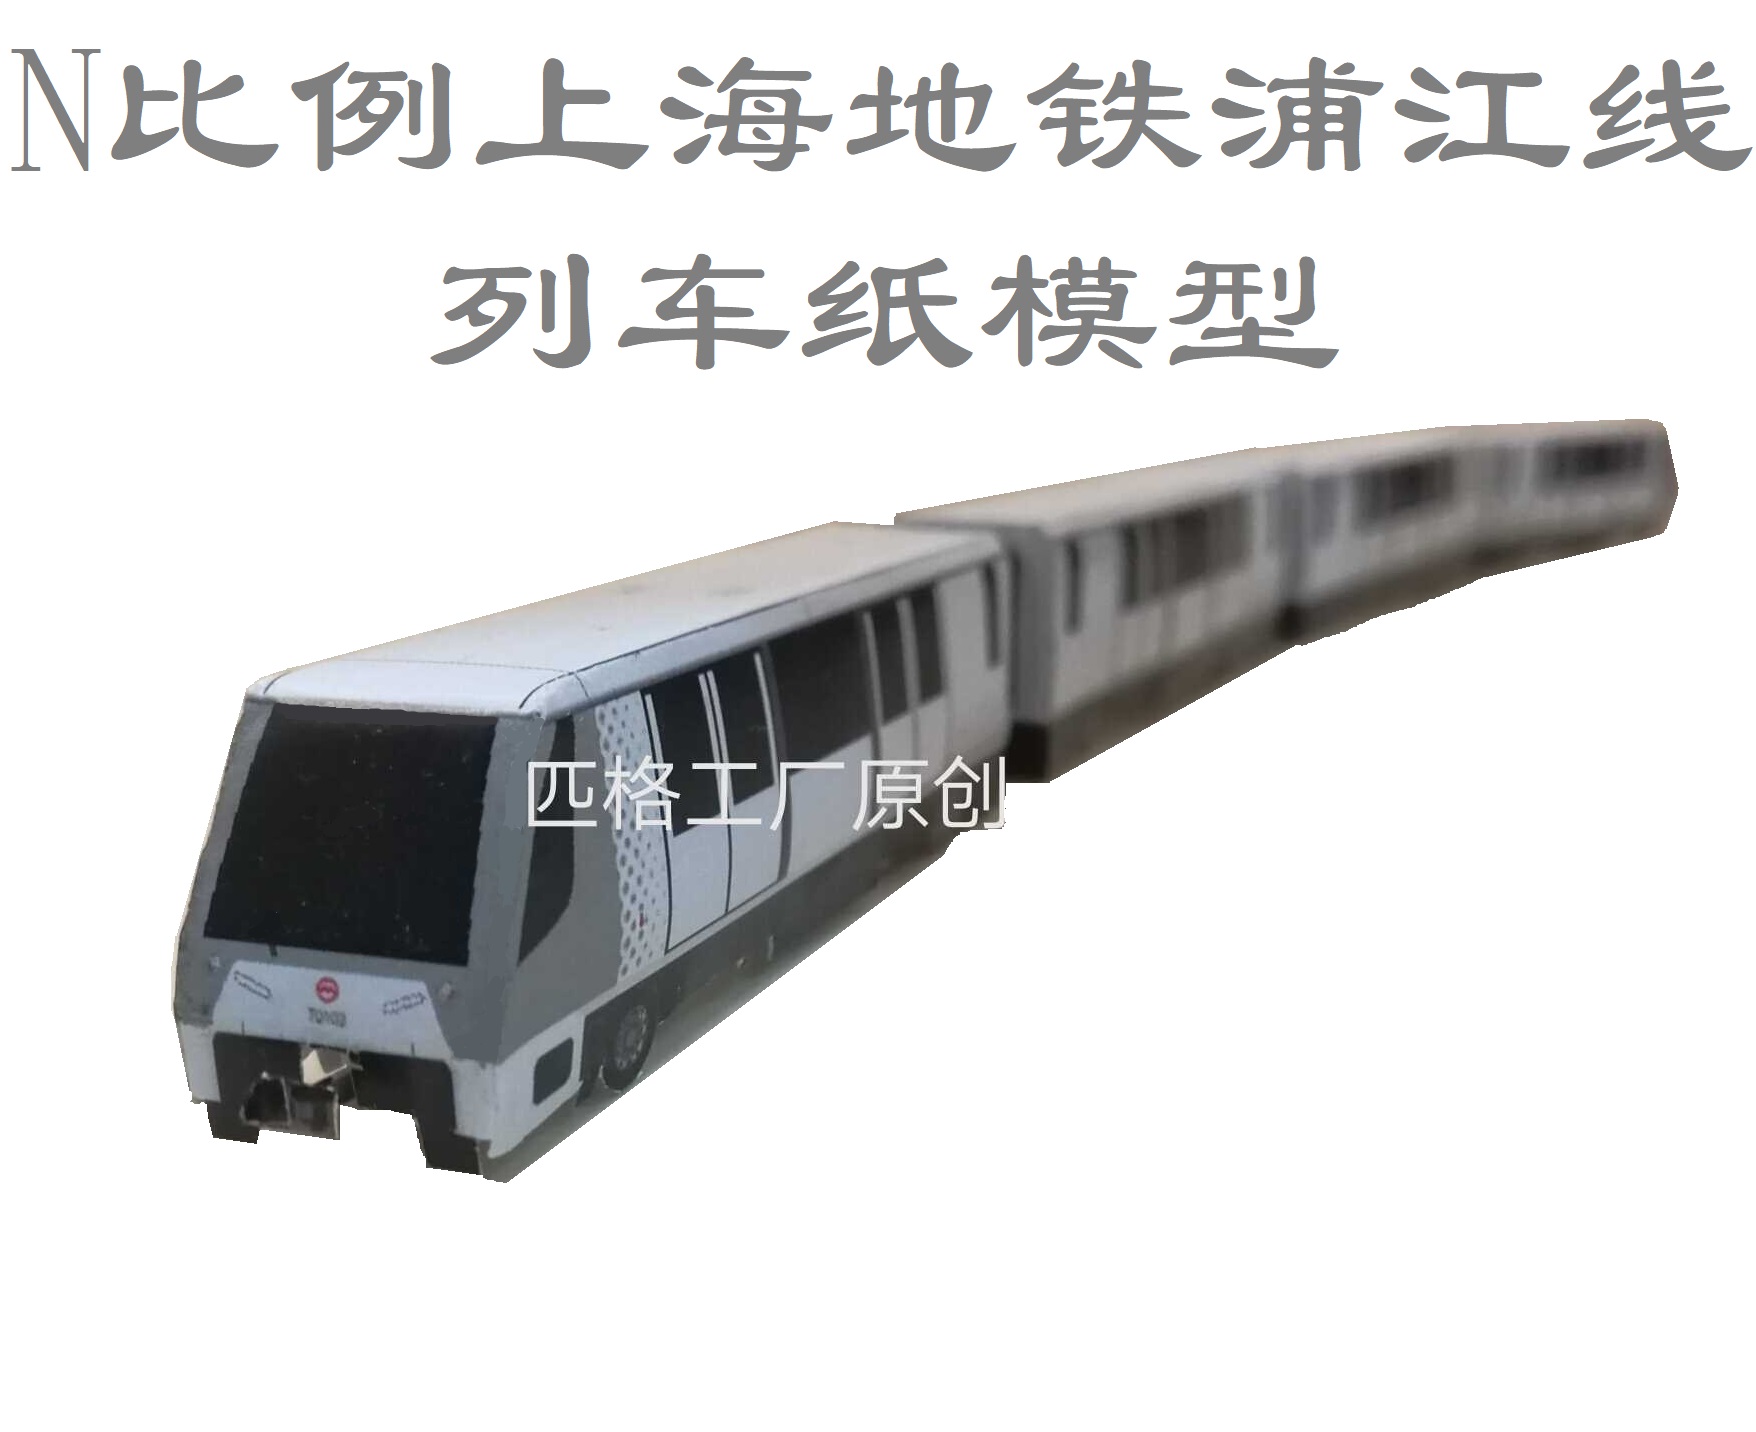 N比例上海地铁浦江线列车3D纸模DIY手工制作火车高铁动车地铁模型